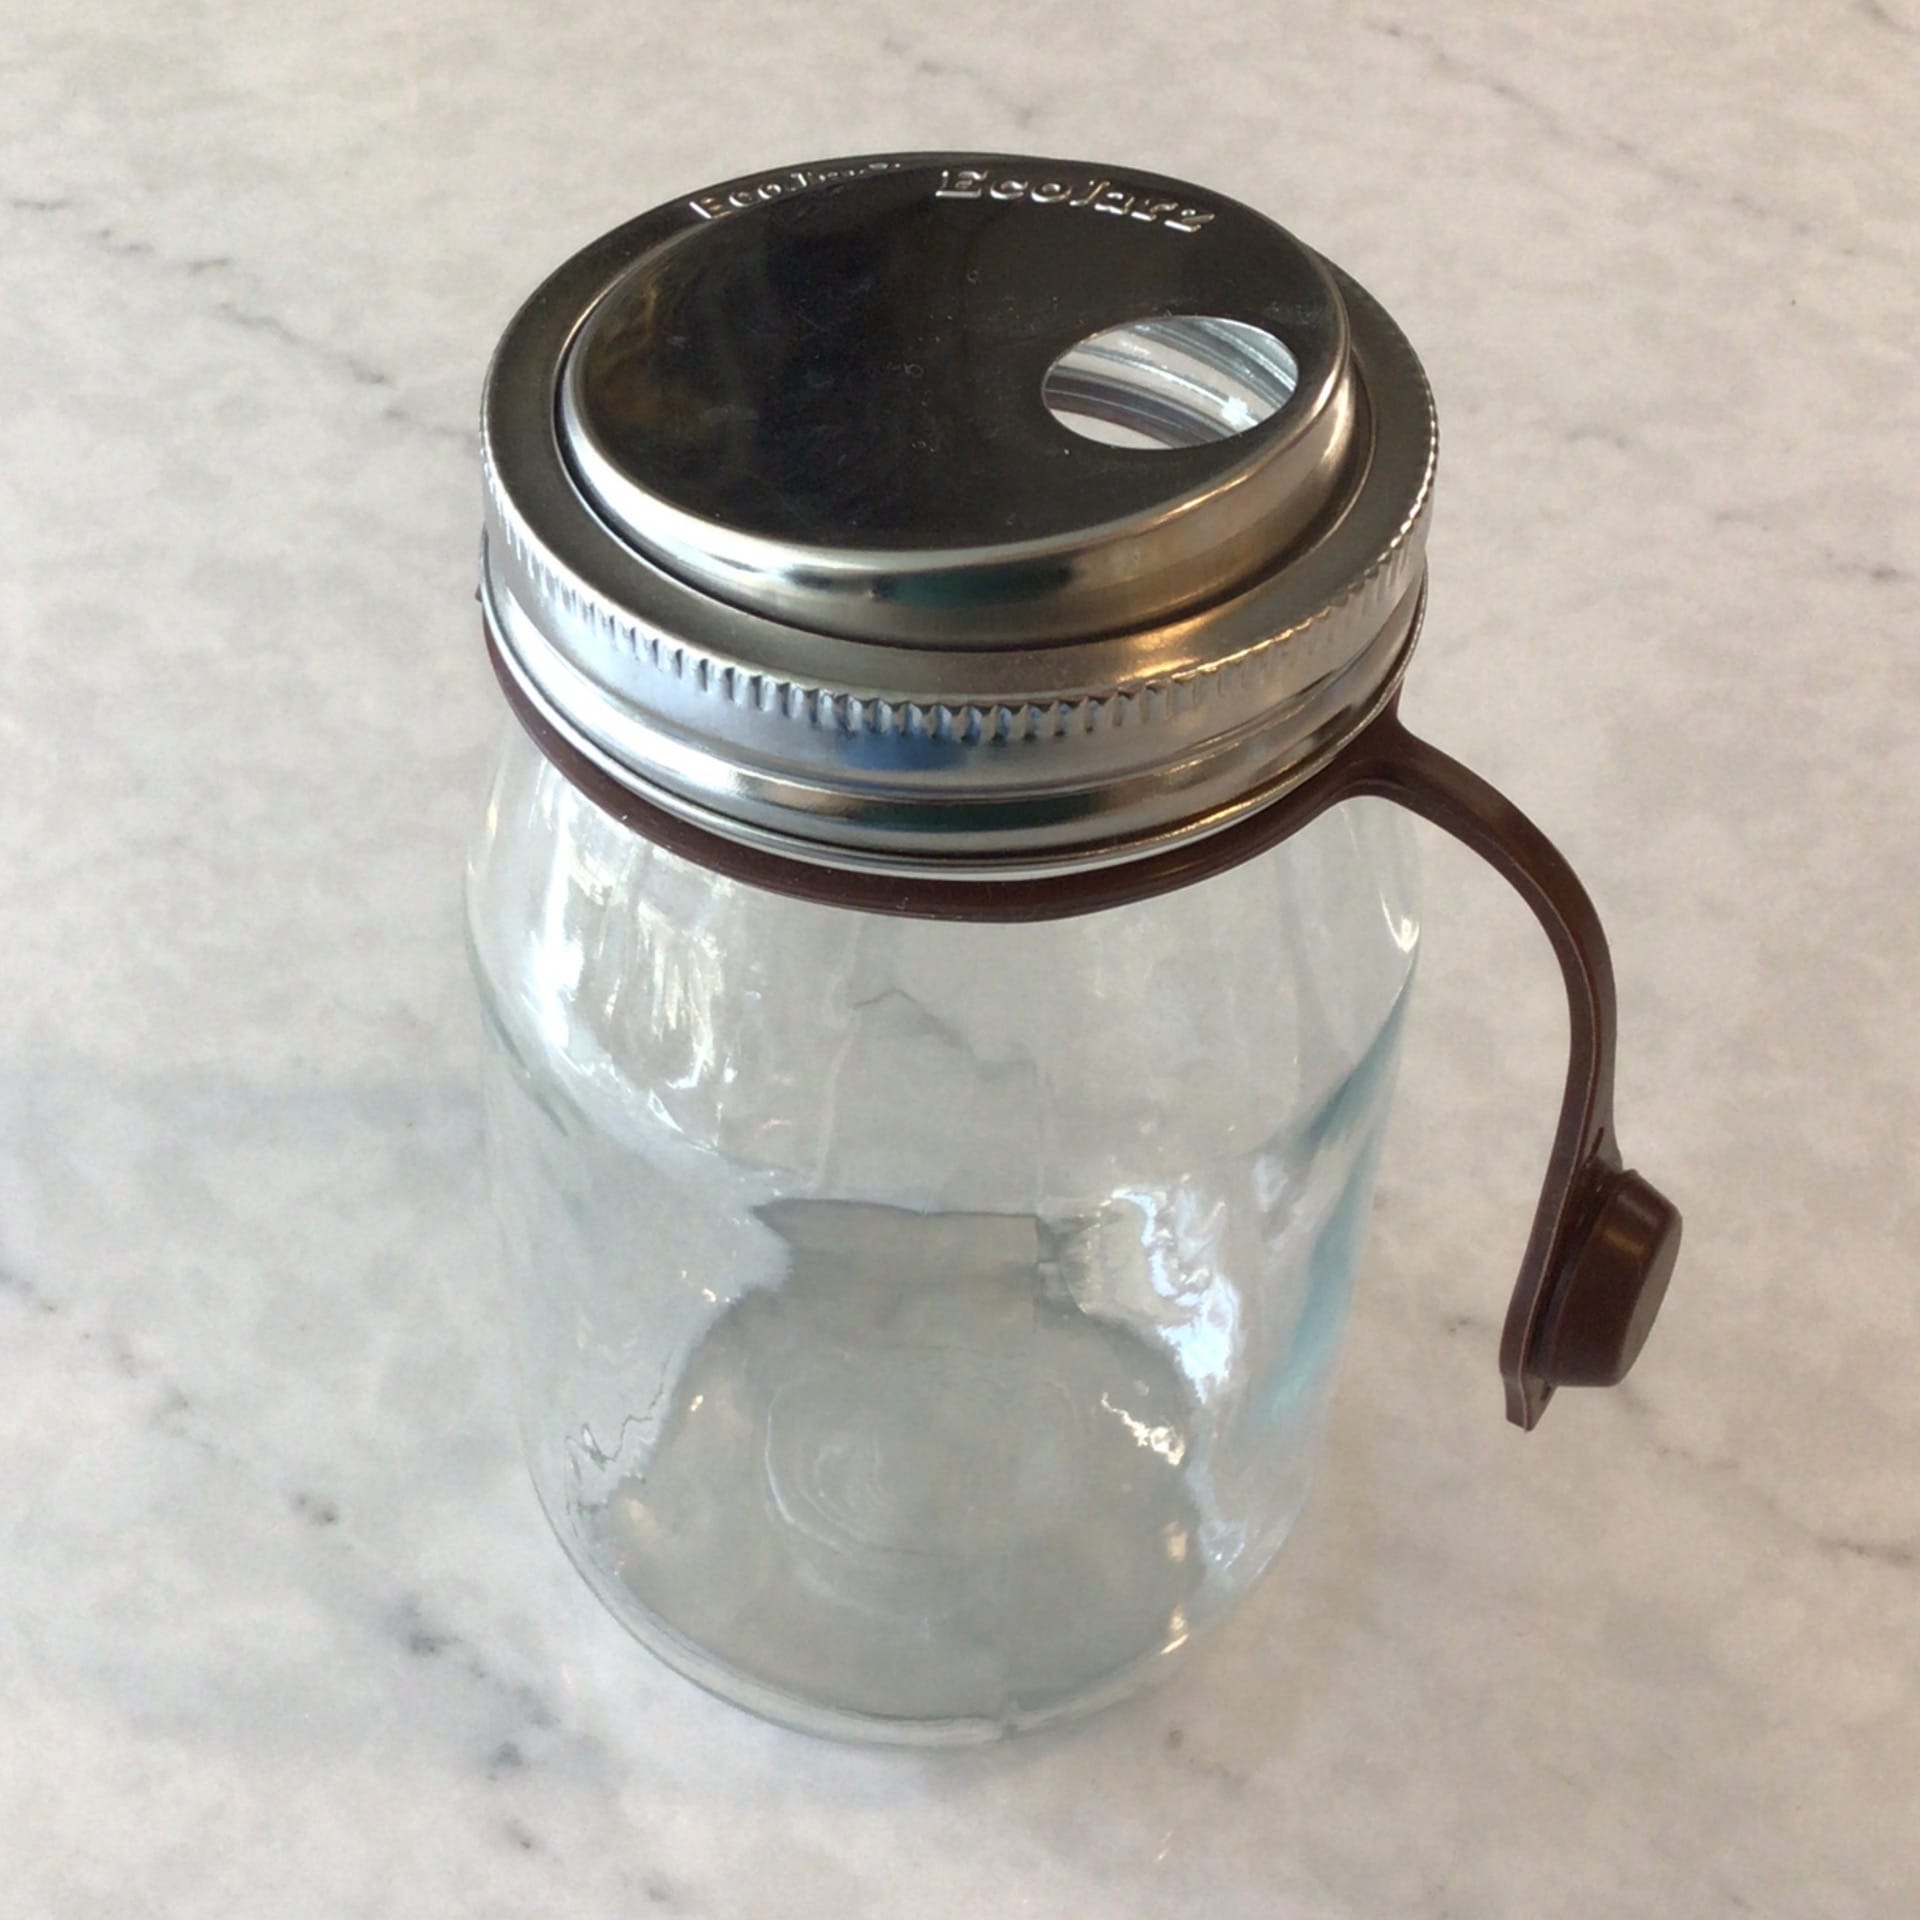 EcoJarz - PopTop Sealable Drinking Jar Lid - Wide Mouth